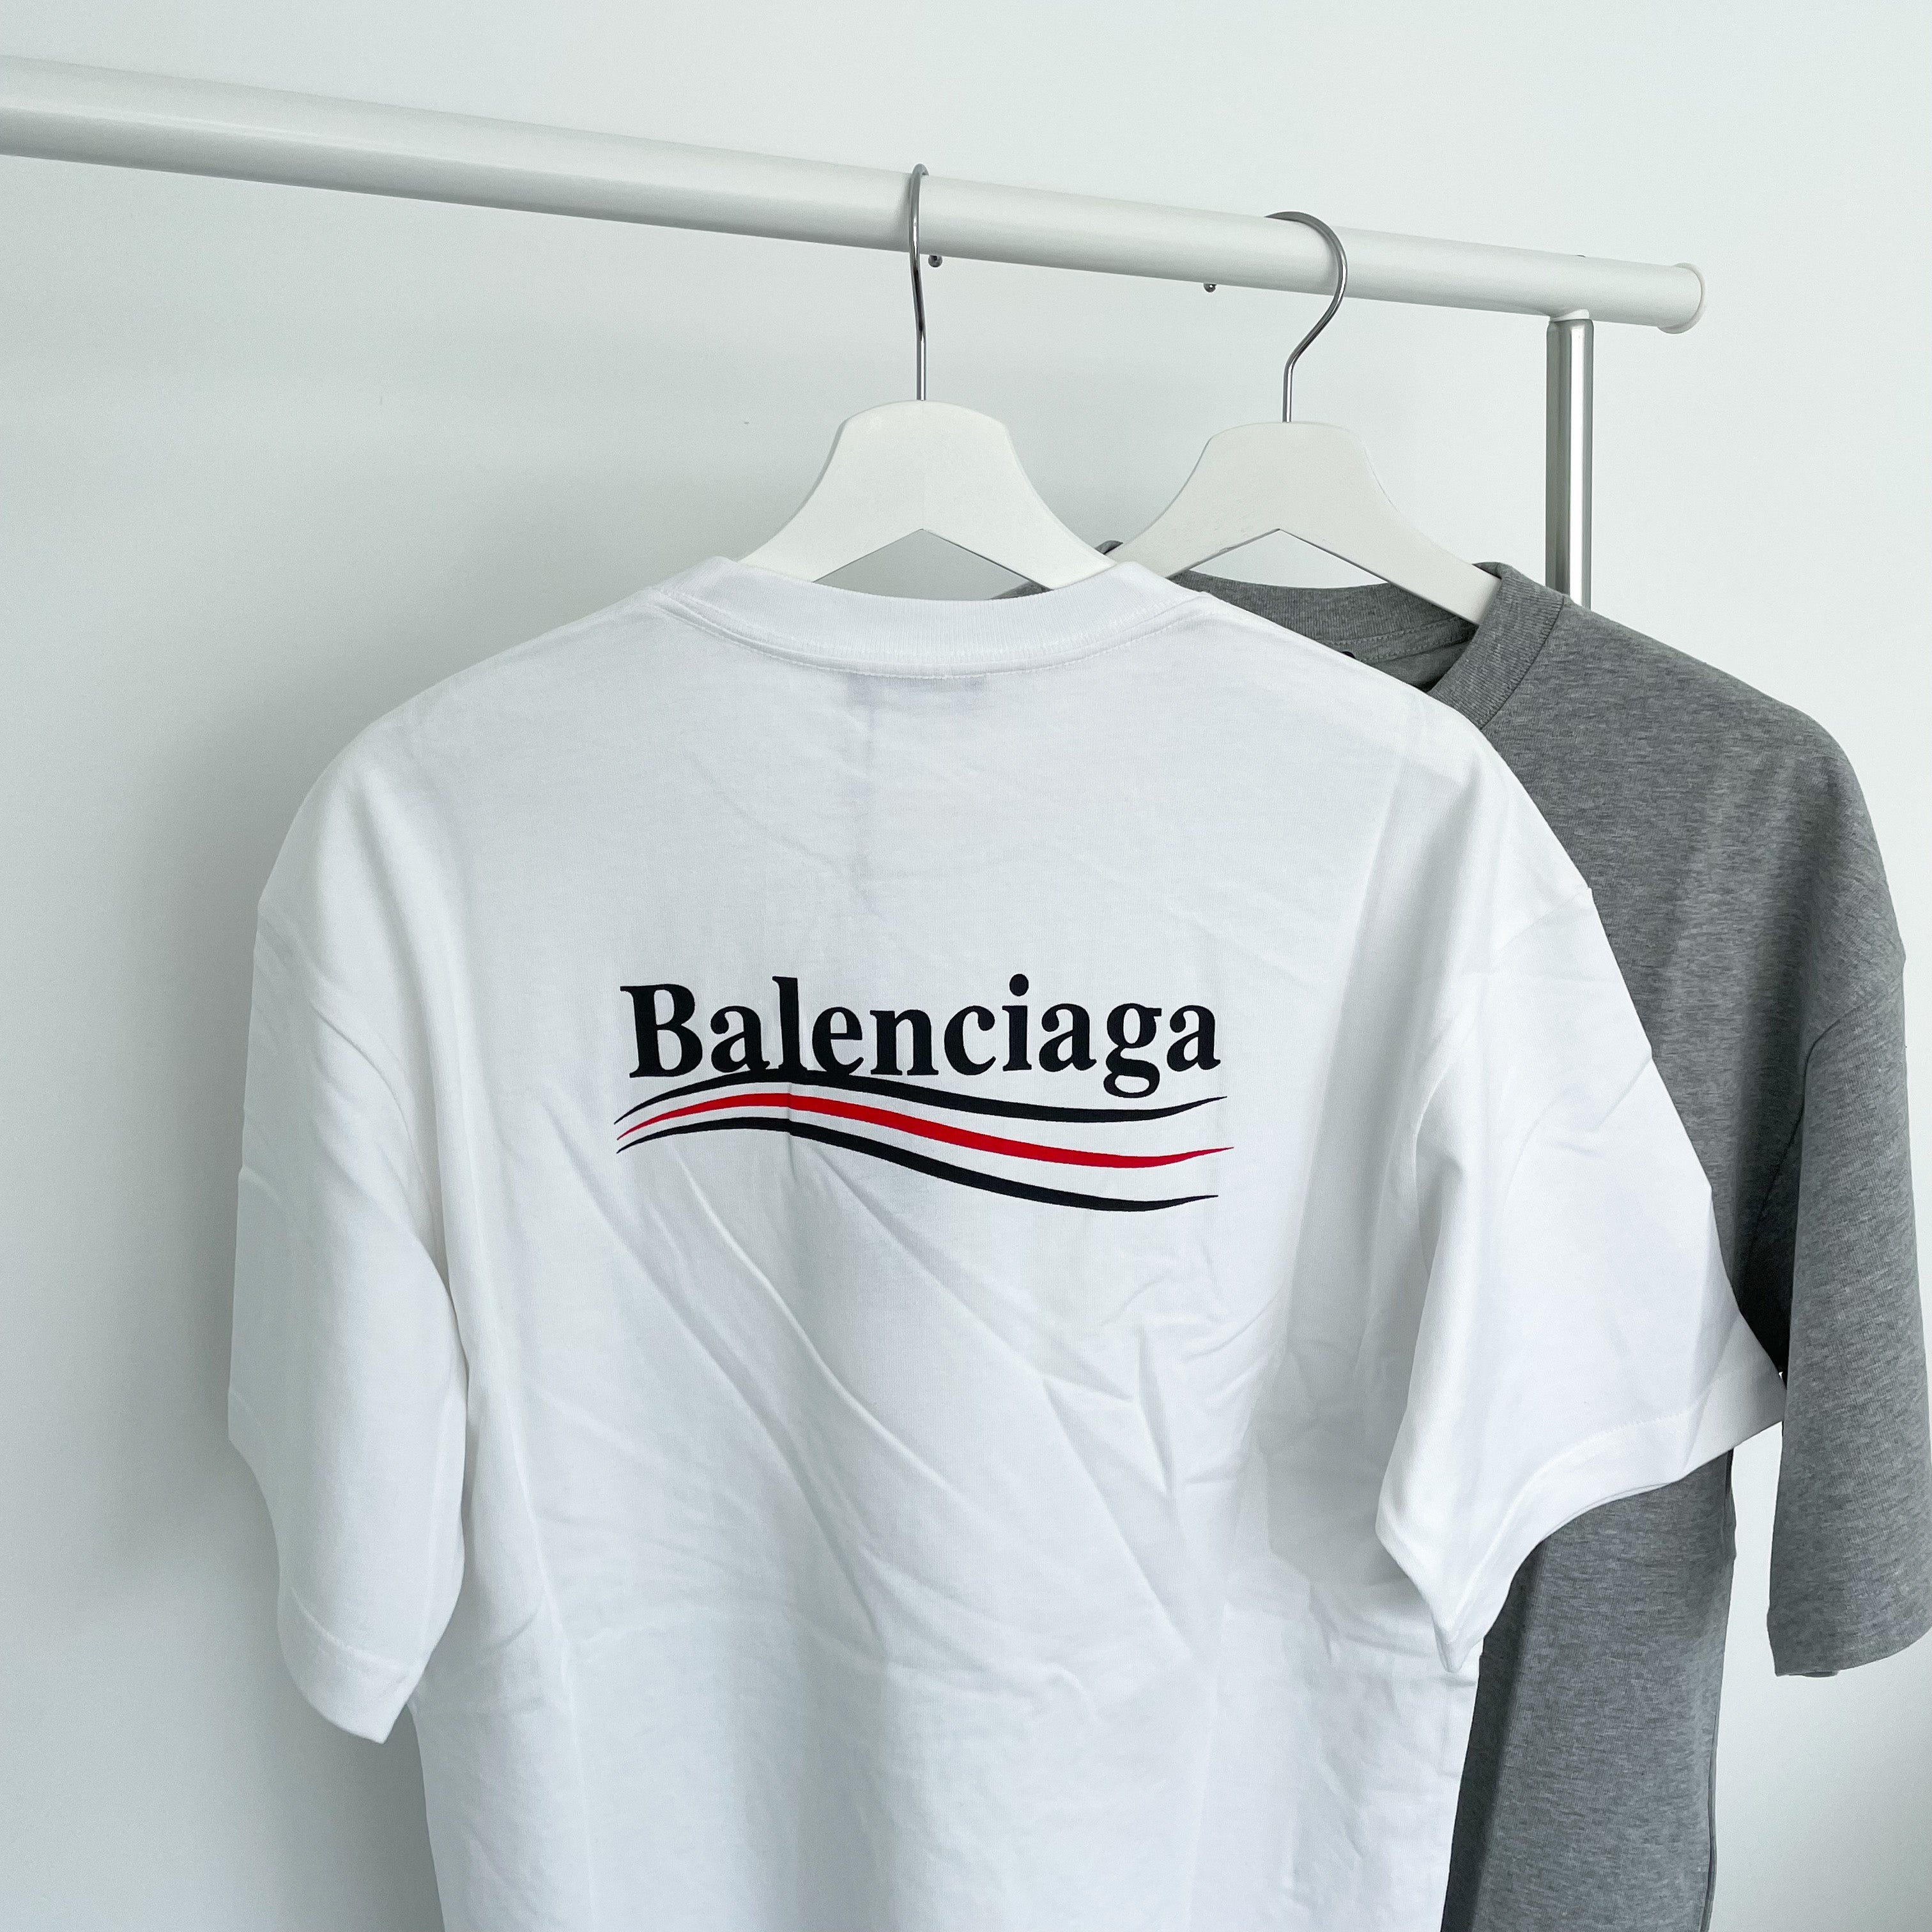 Balenciaga Oversized Campaign Tee - White